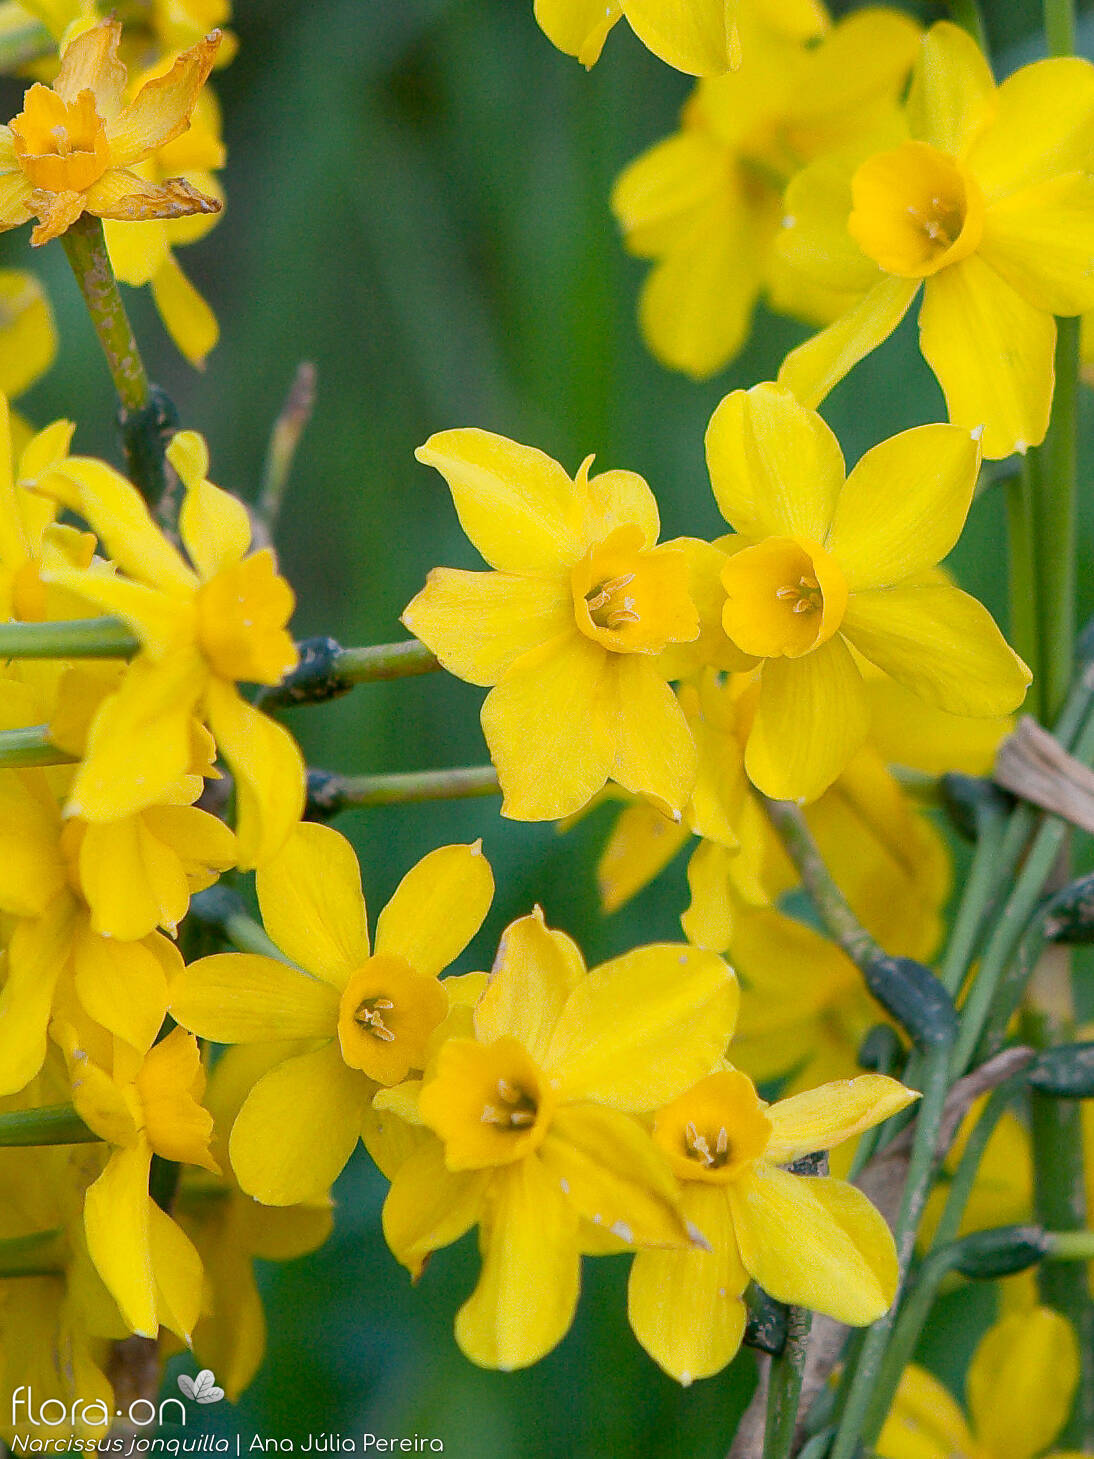 Narcissus jonquilla - Flor (geral) | Ana Júlia Pereira; CC BY-NC 4.0